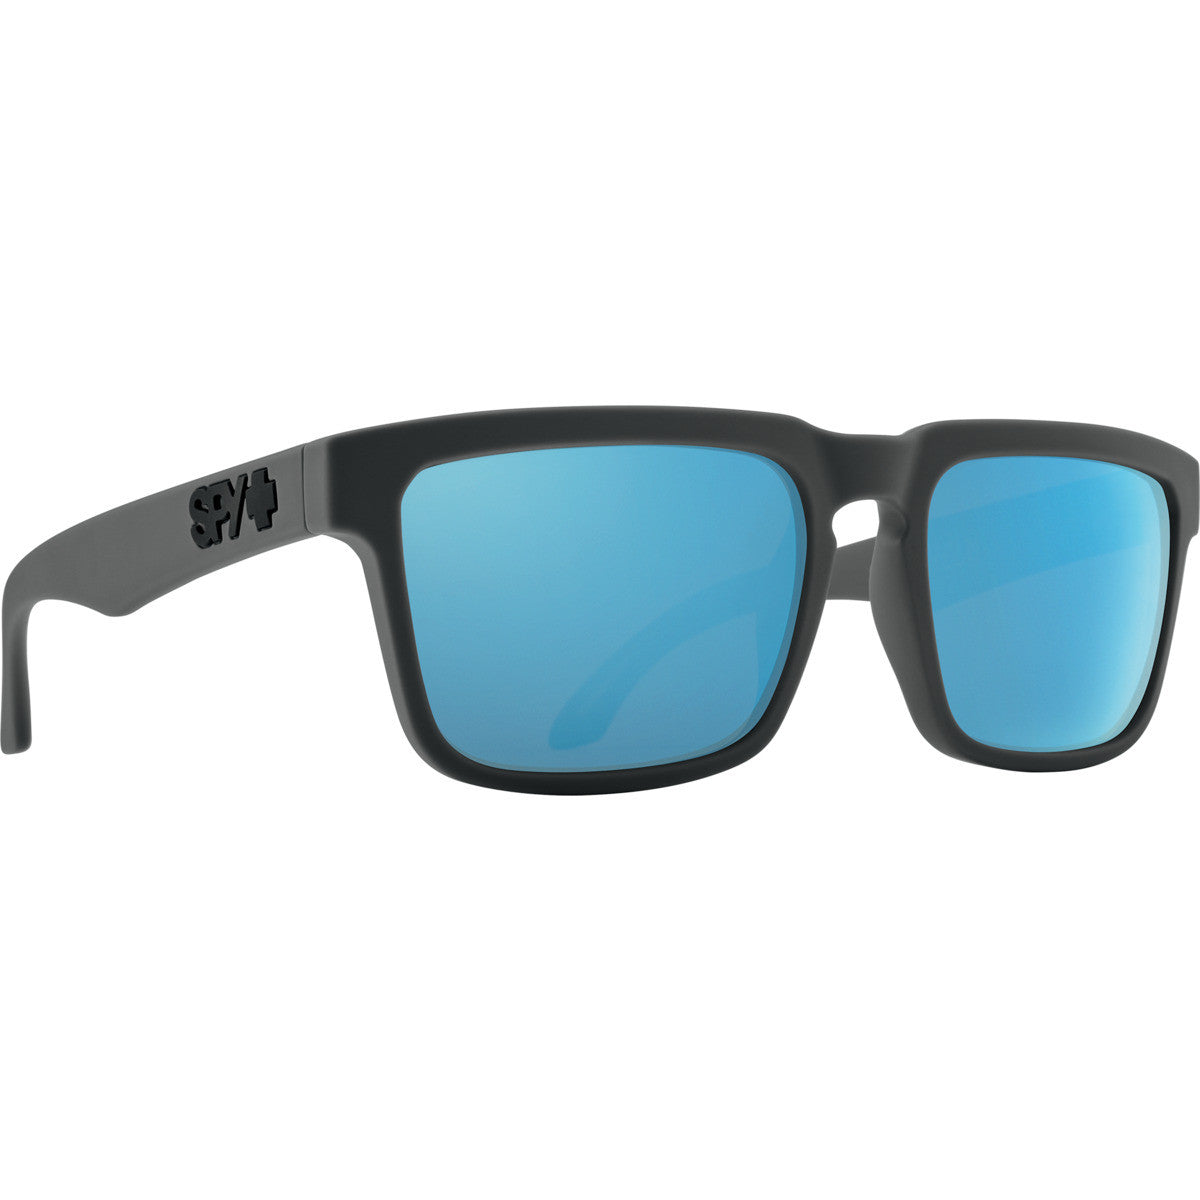 Spy Helm Sunglasses  Soft Matte Dark Gray Medium-Large M-L 54-61